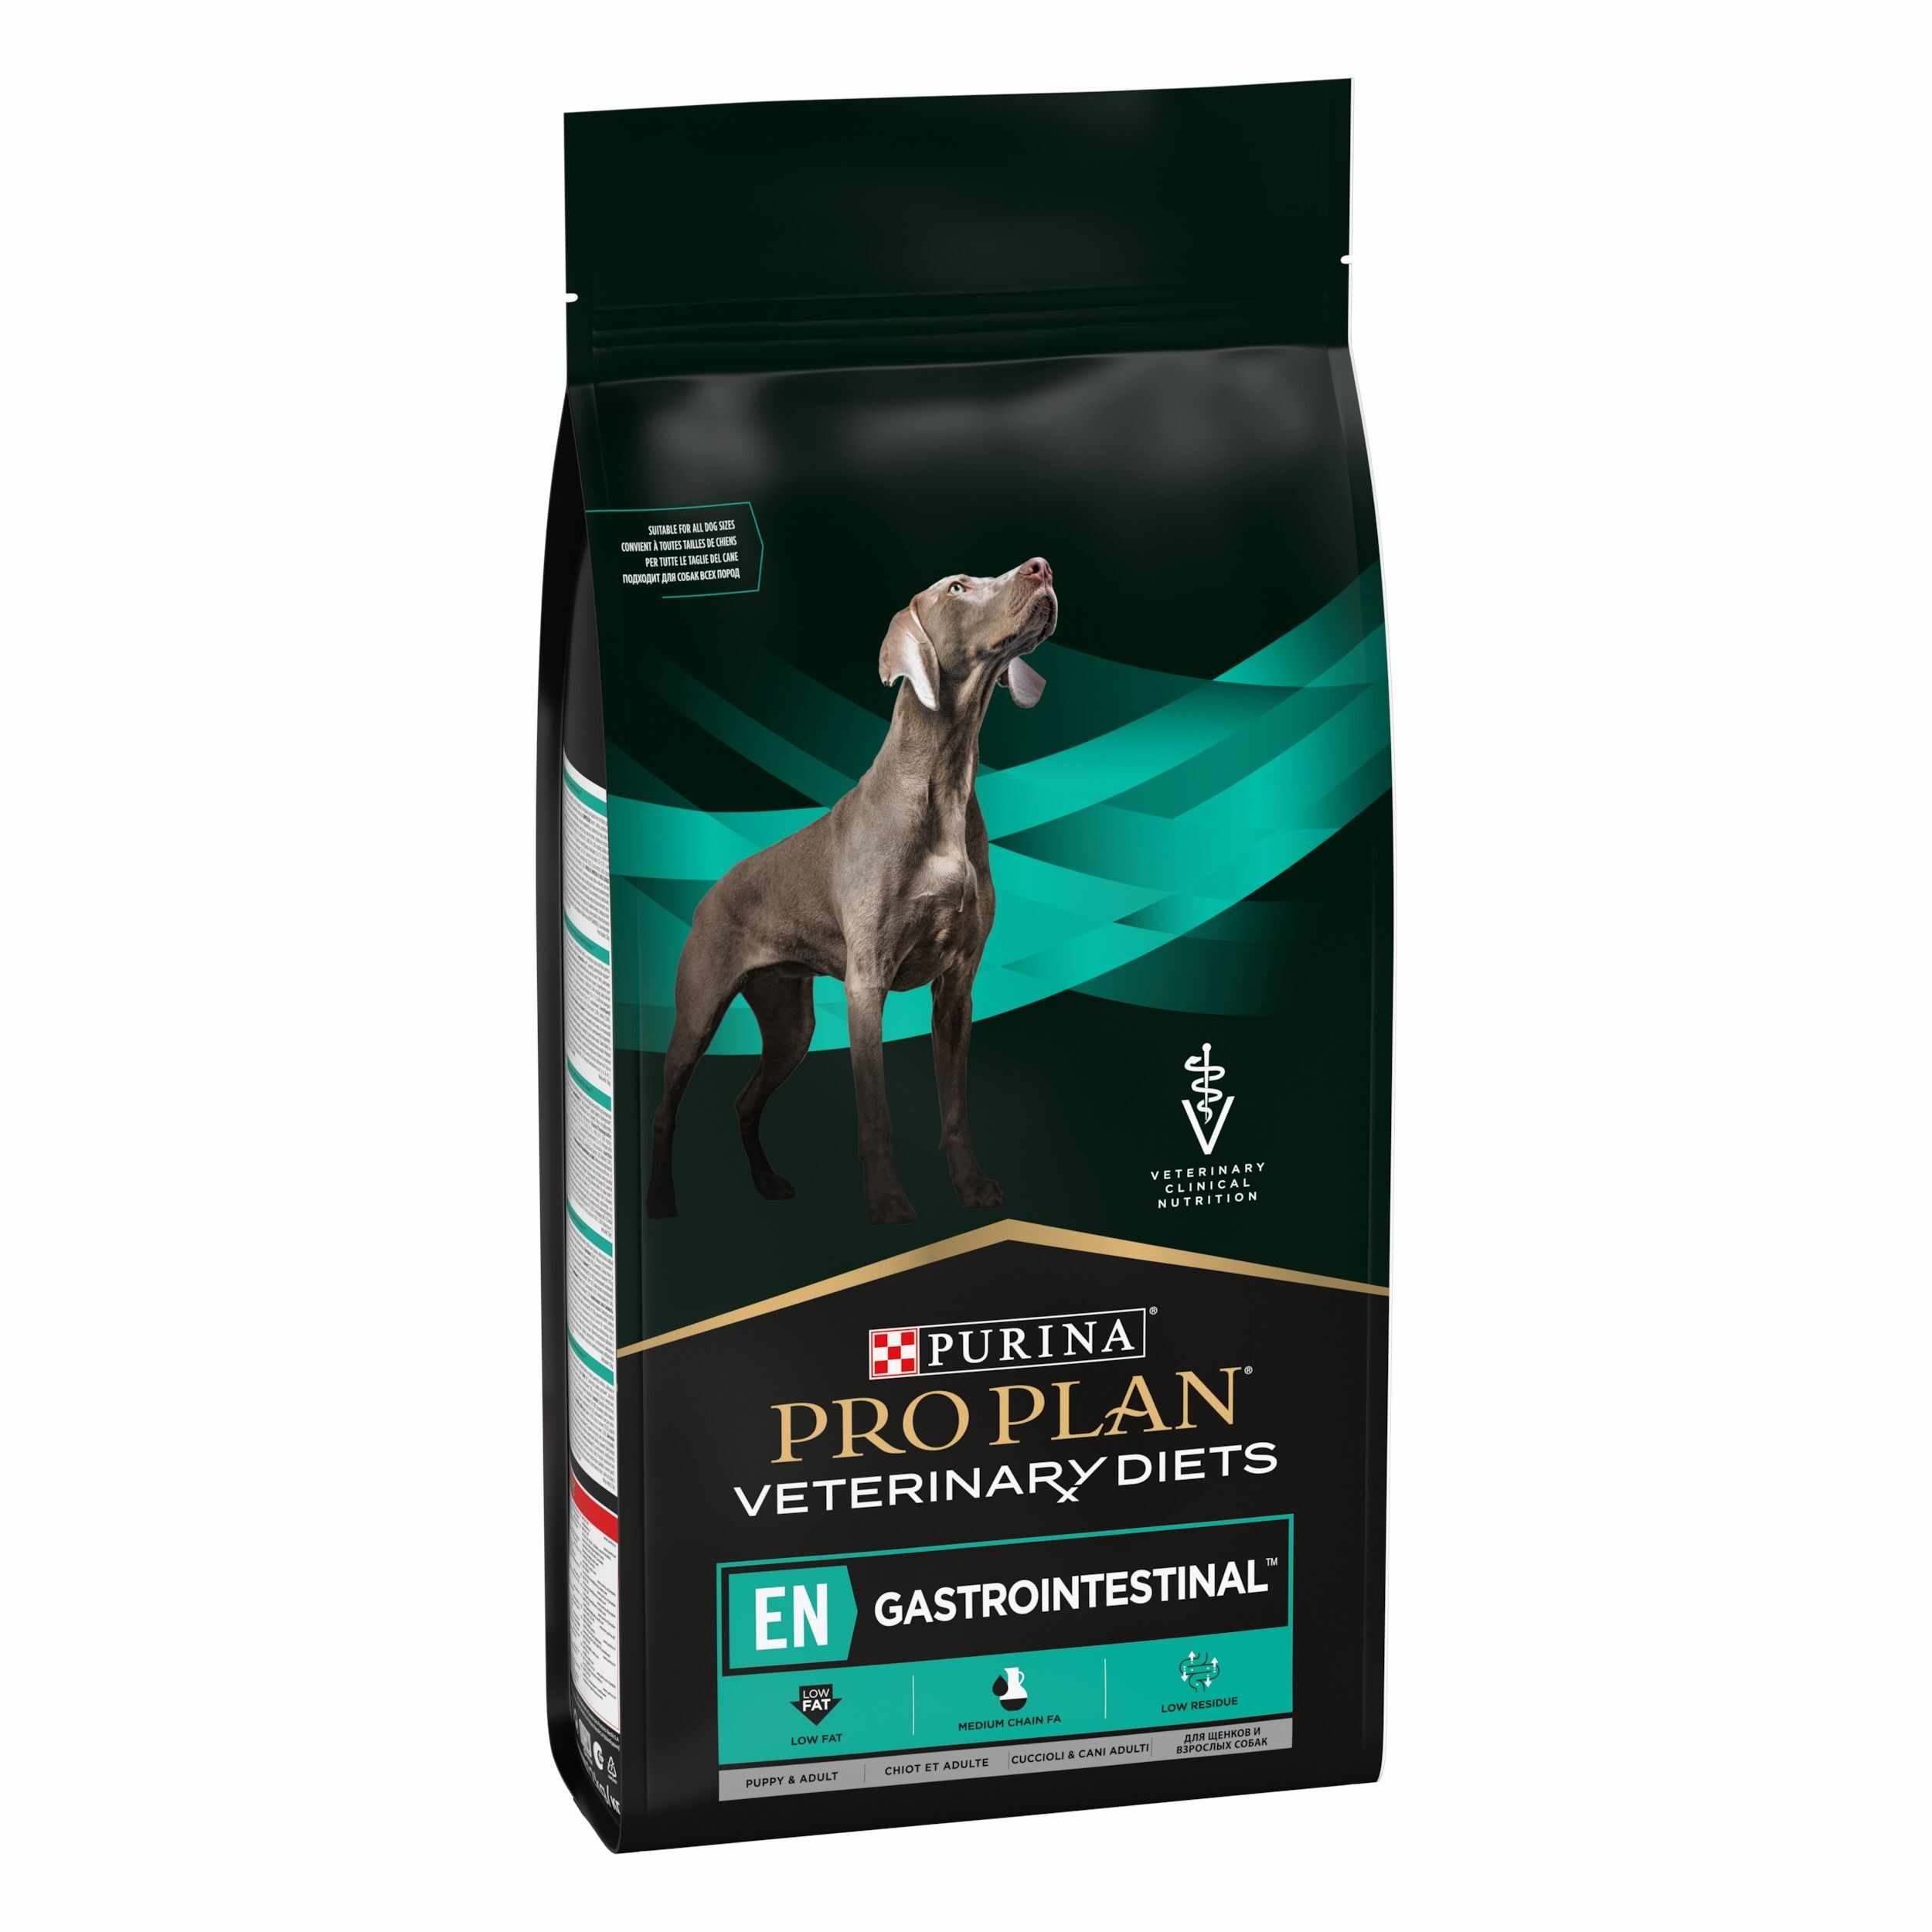 Purina Veterinary Diets Canine EN, Gastrointestinal, 12 kg